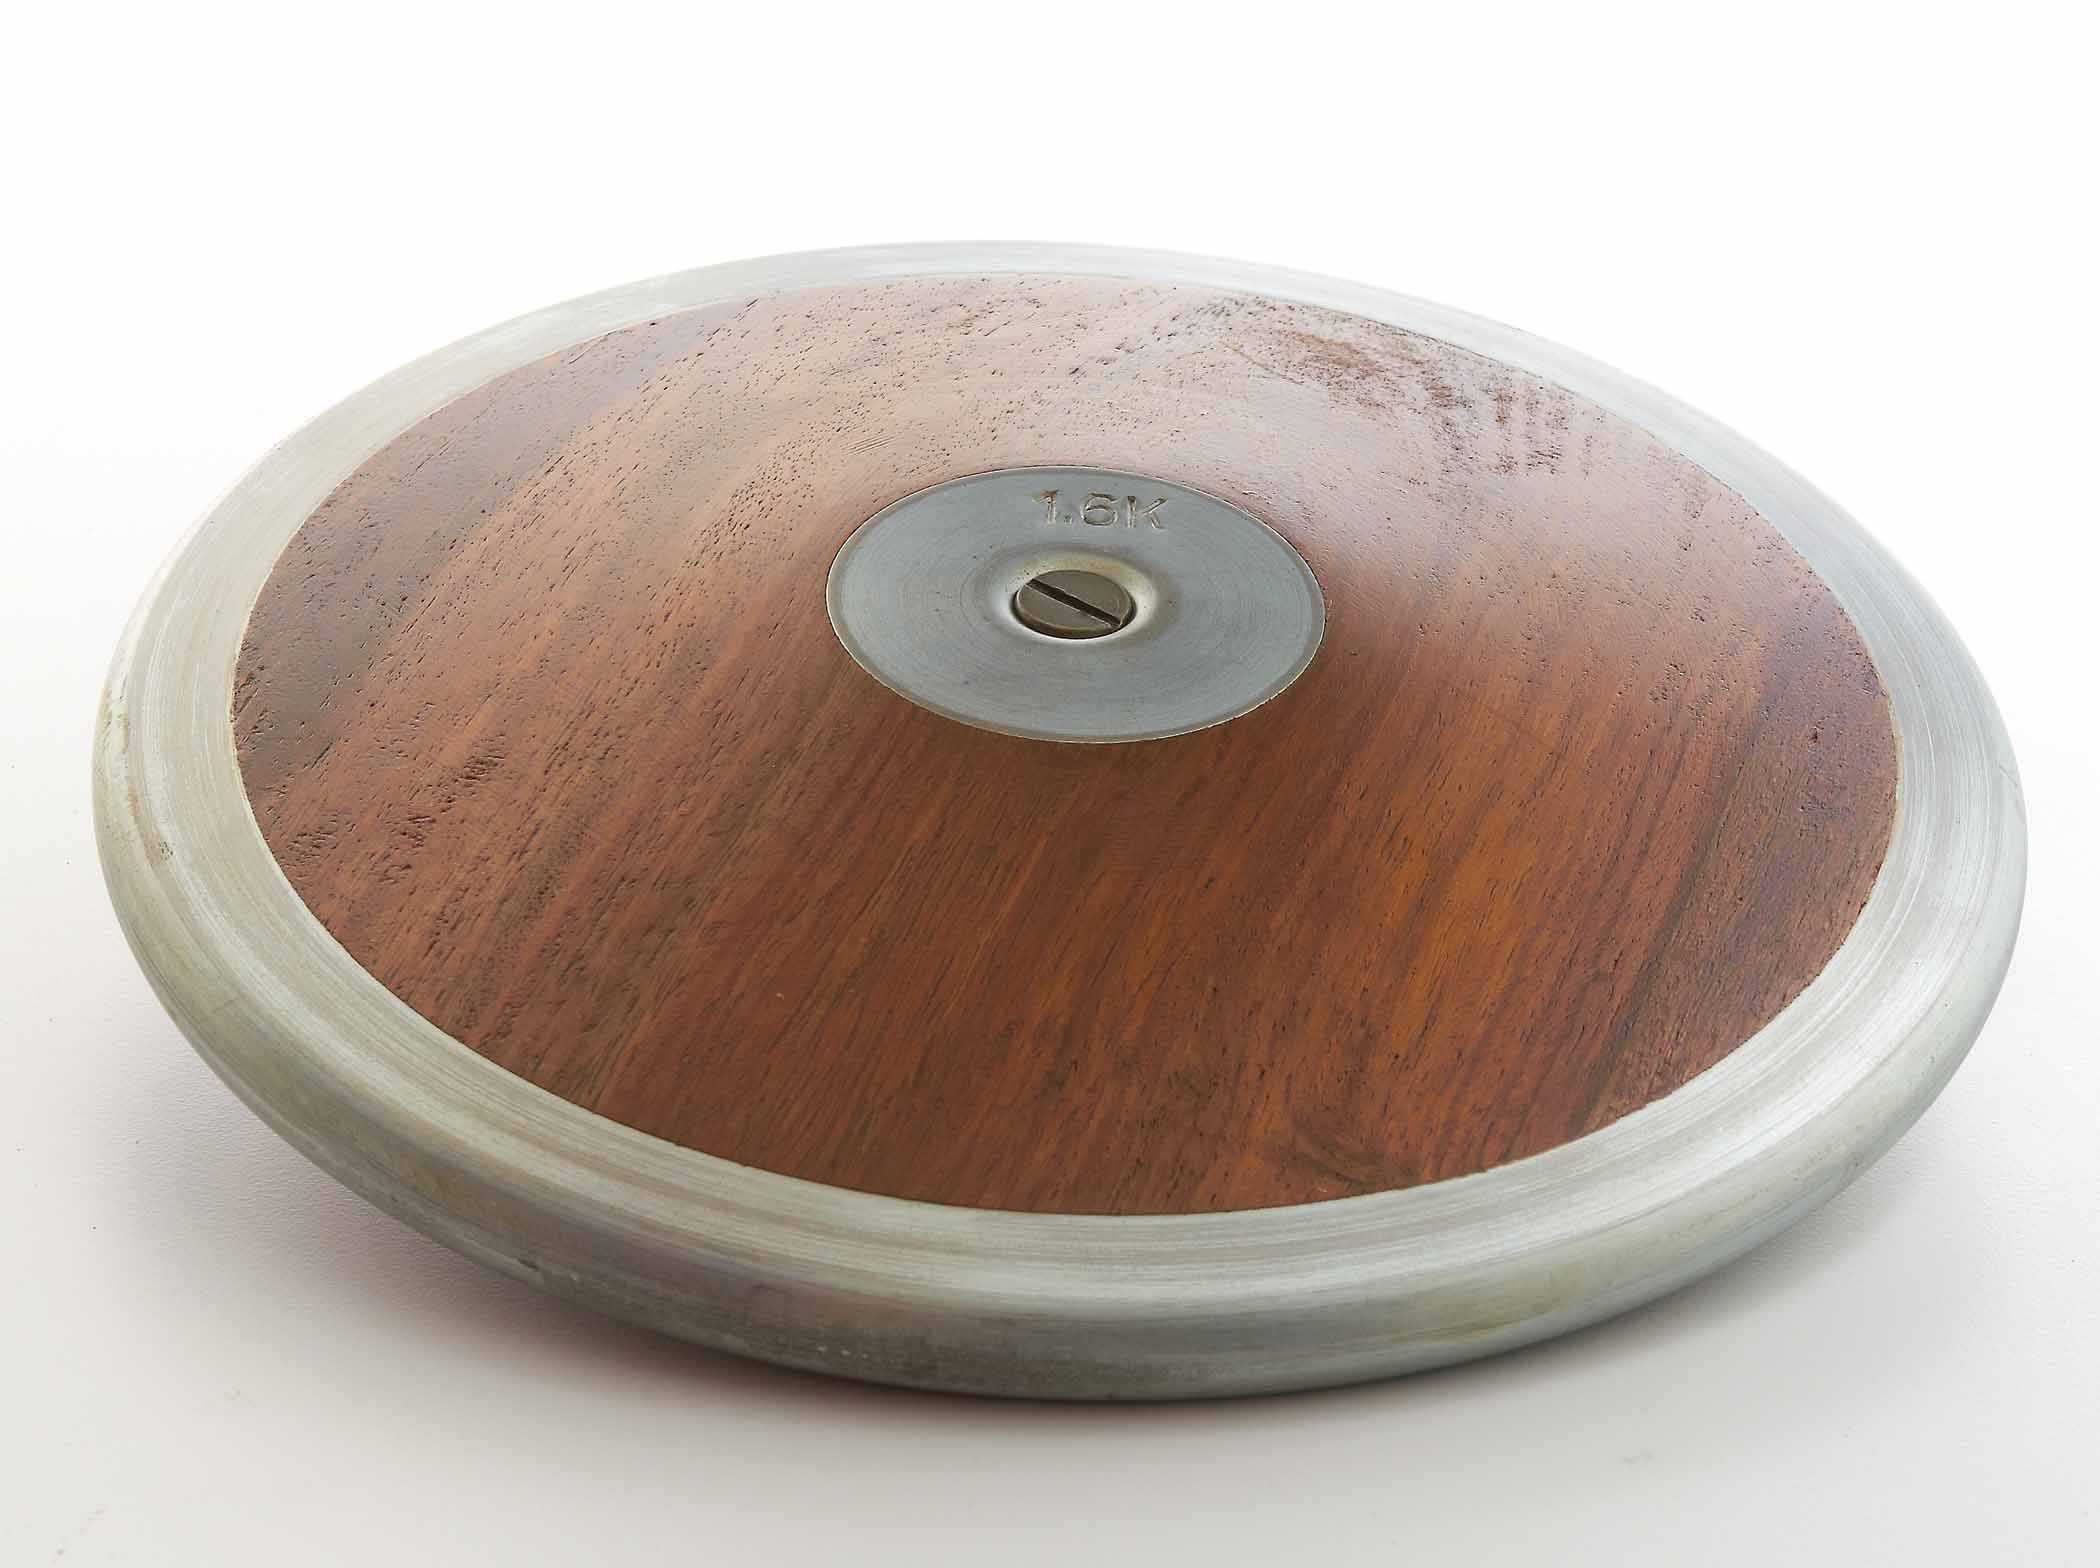 PORTaPiT Poplar Wood Discus, 1K - image 1 of 1